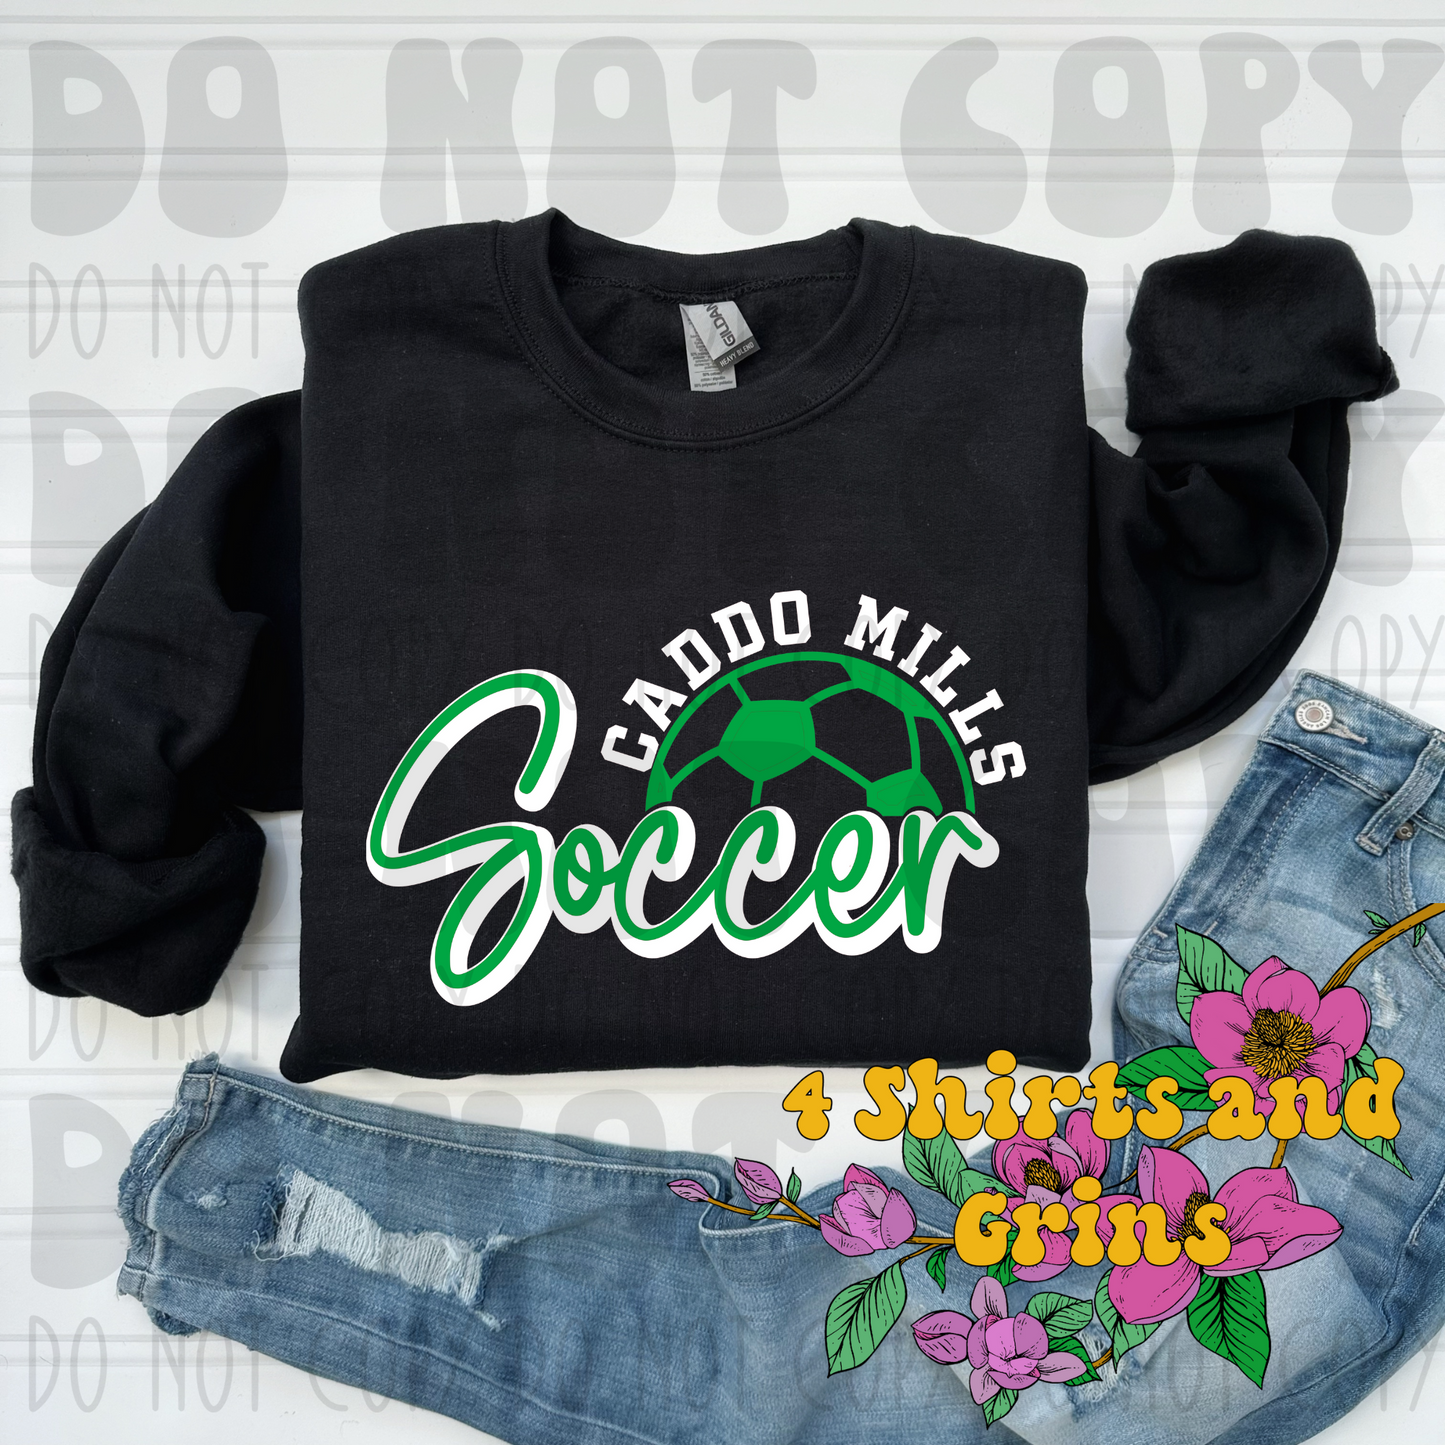 Caddo Mills Soccer - Adult Sizes